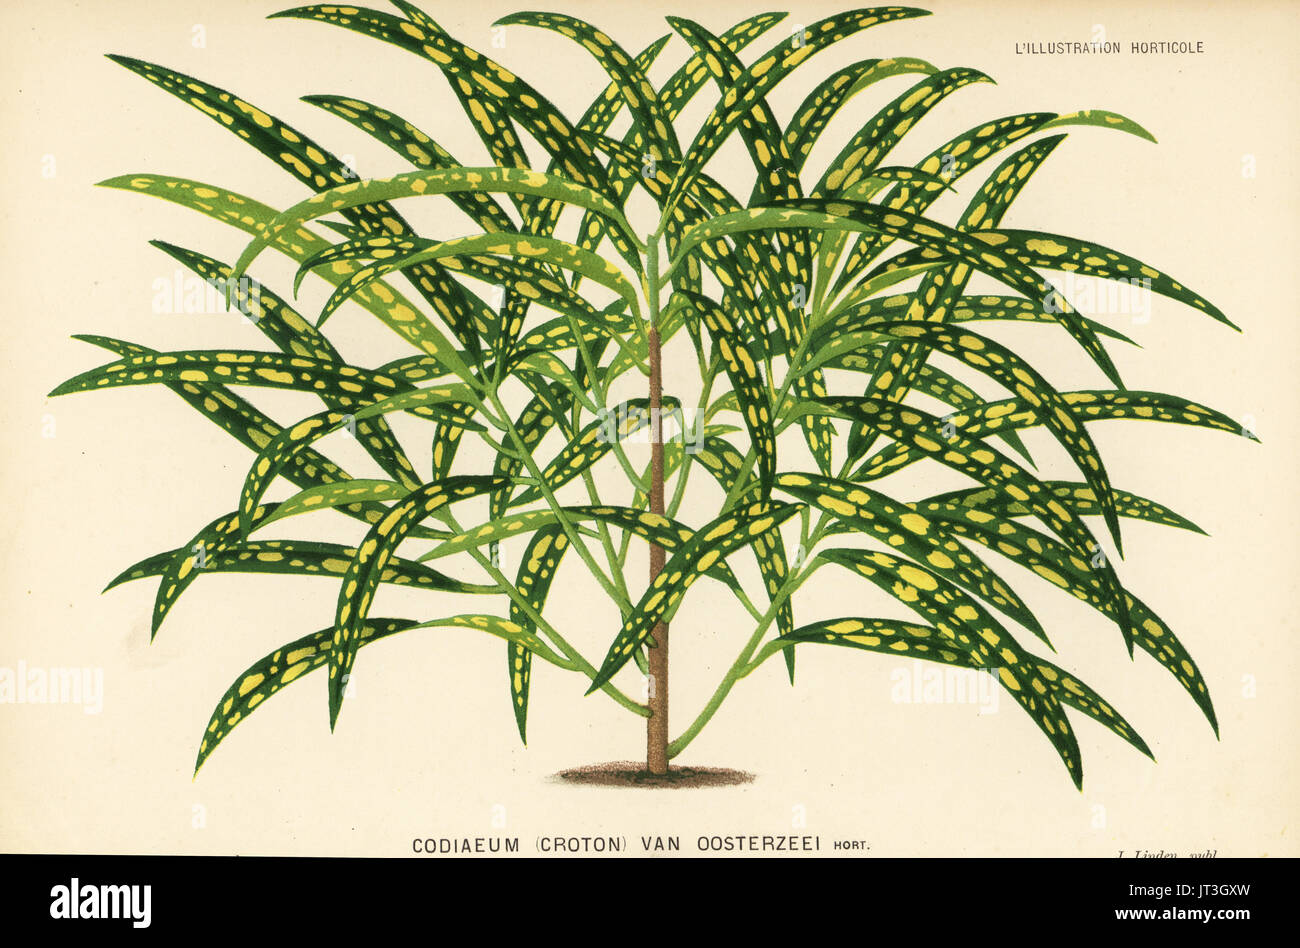 Garden croton, Codiaeum variegatum (Codiaeum vanoosterzeei). Chromolithograph by Pieter de Pannemaeker from Jean Linden's l'Illustration Horticole, Brussels, 1883. Stock Photo